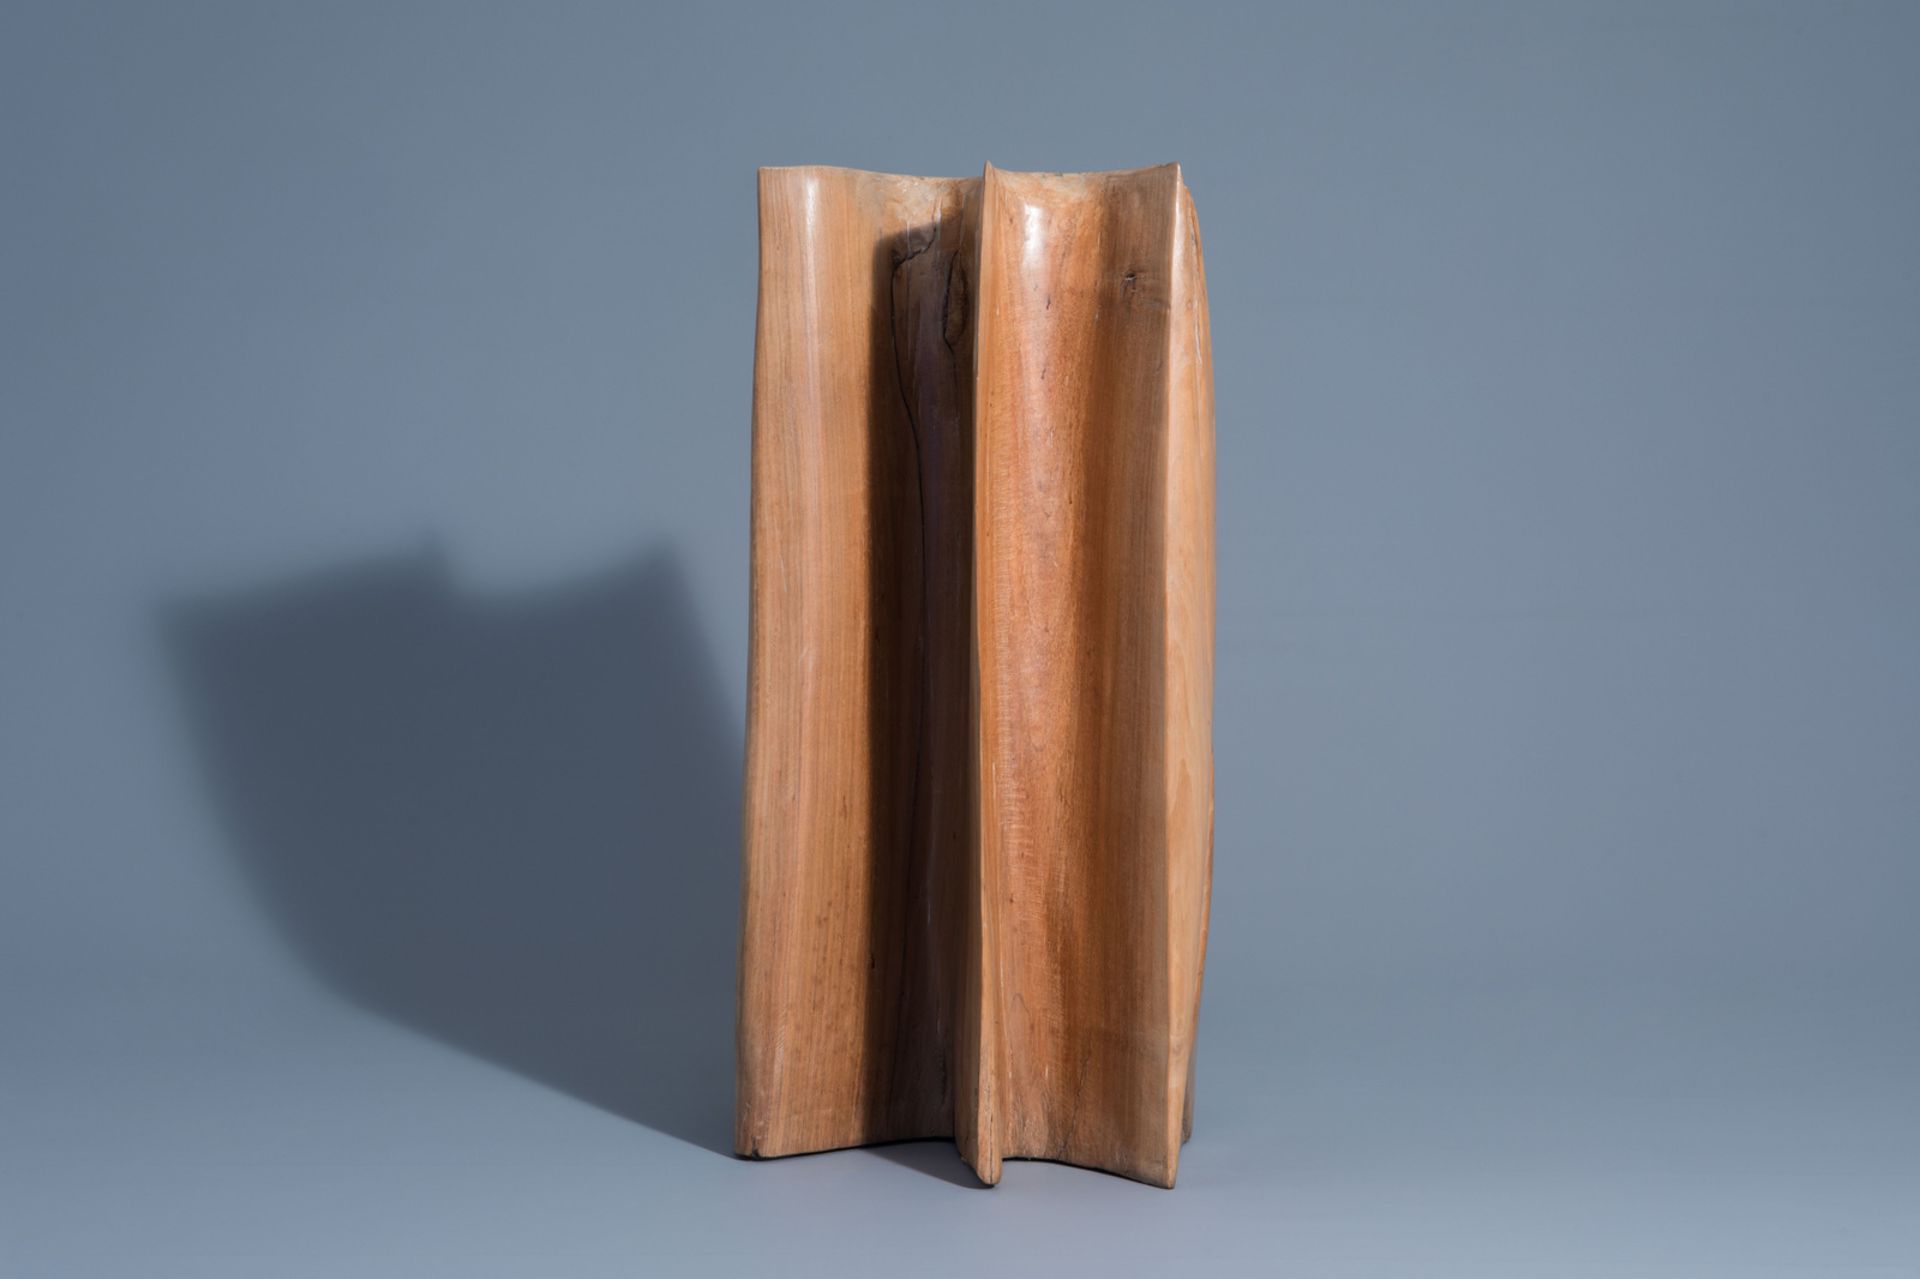 Monogrammed VDB (?): Untitled, wood sculpture - Image 3 of 8